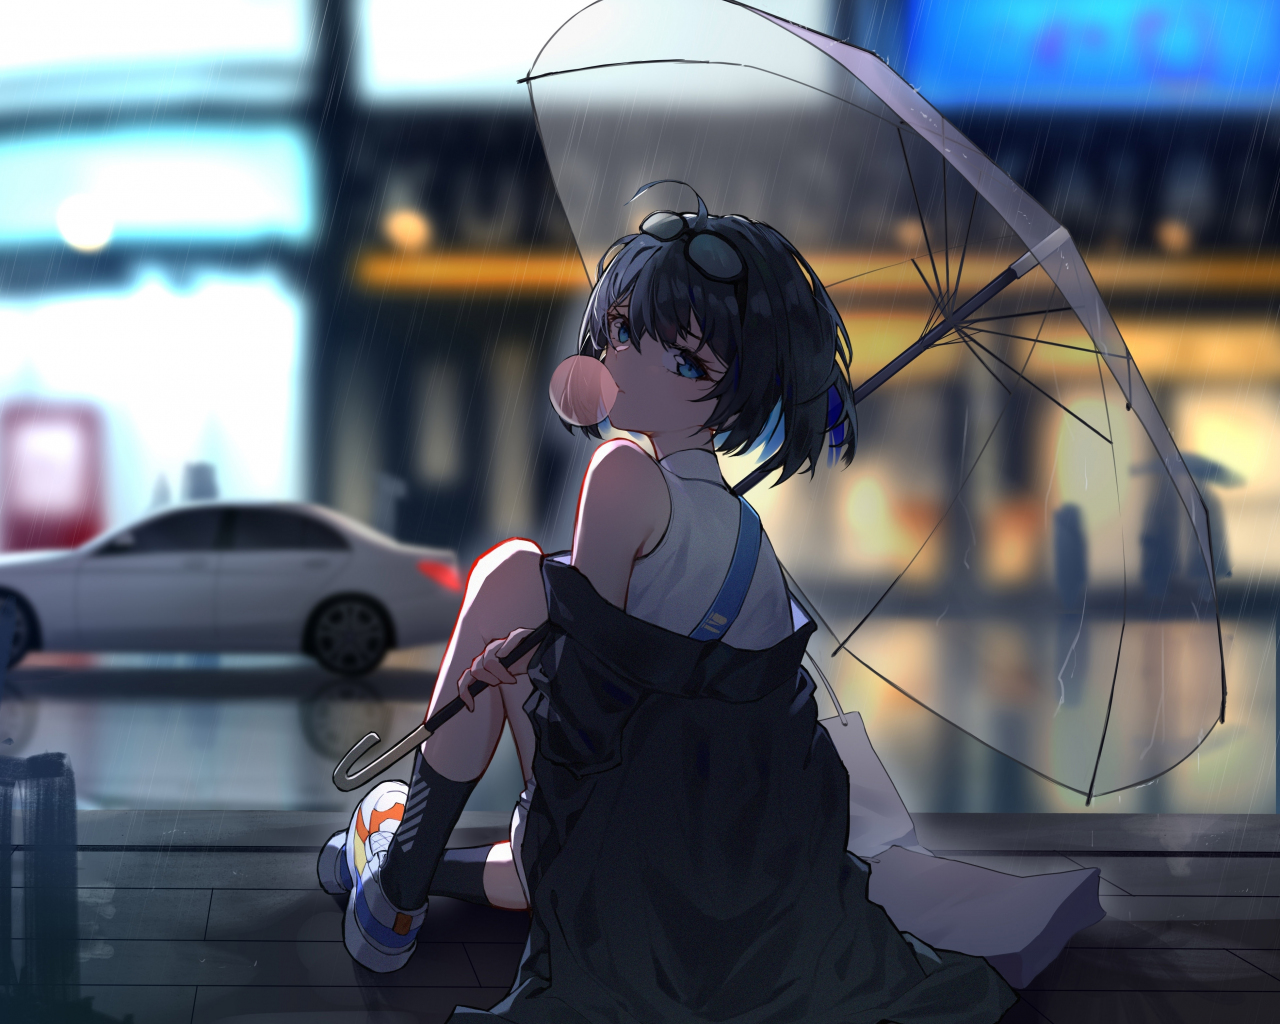 Download 1280x1024 wallpaper enjoying rain, anime girl, standard 5: fullscreen, 1280x1024 HD image, background, 25093